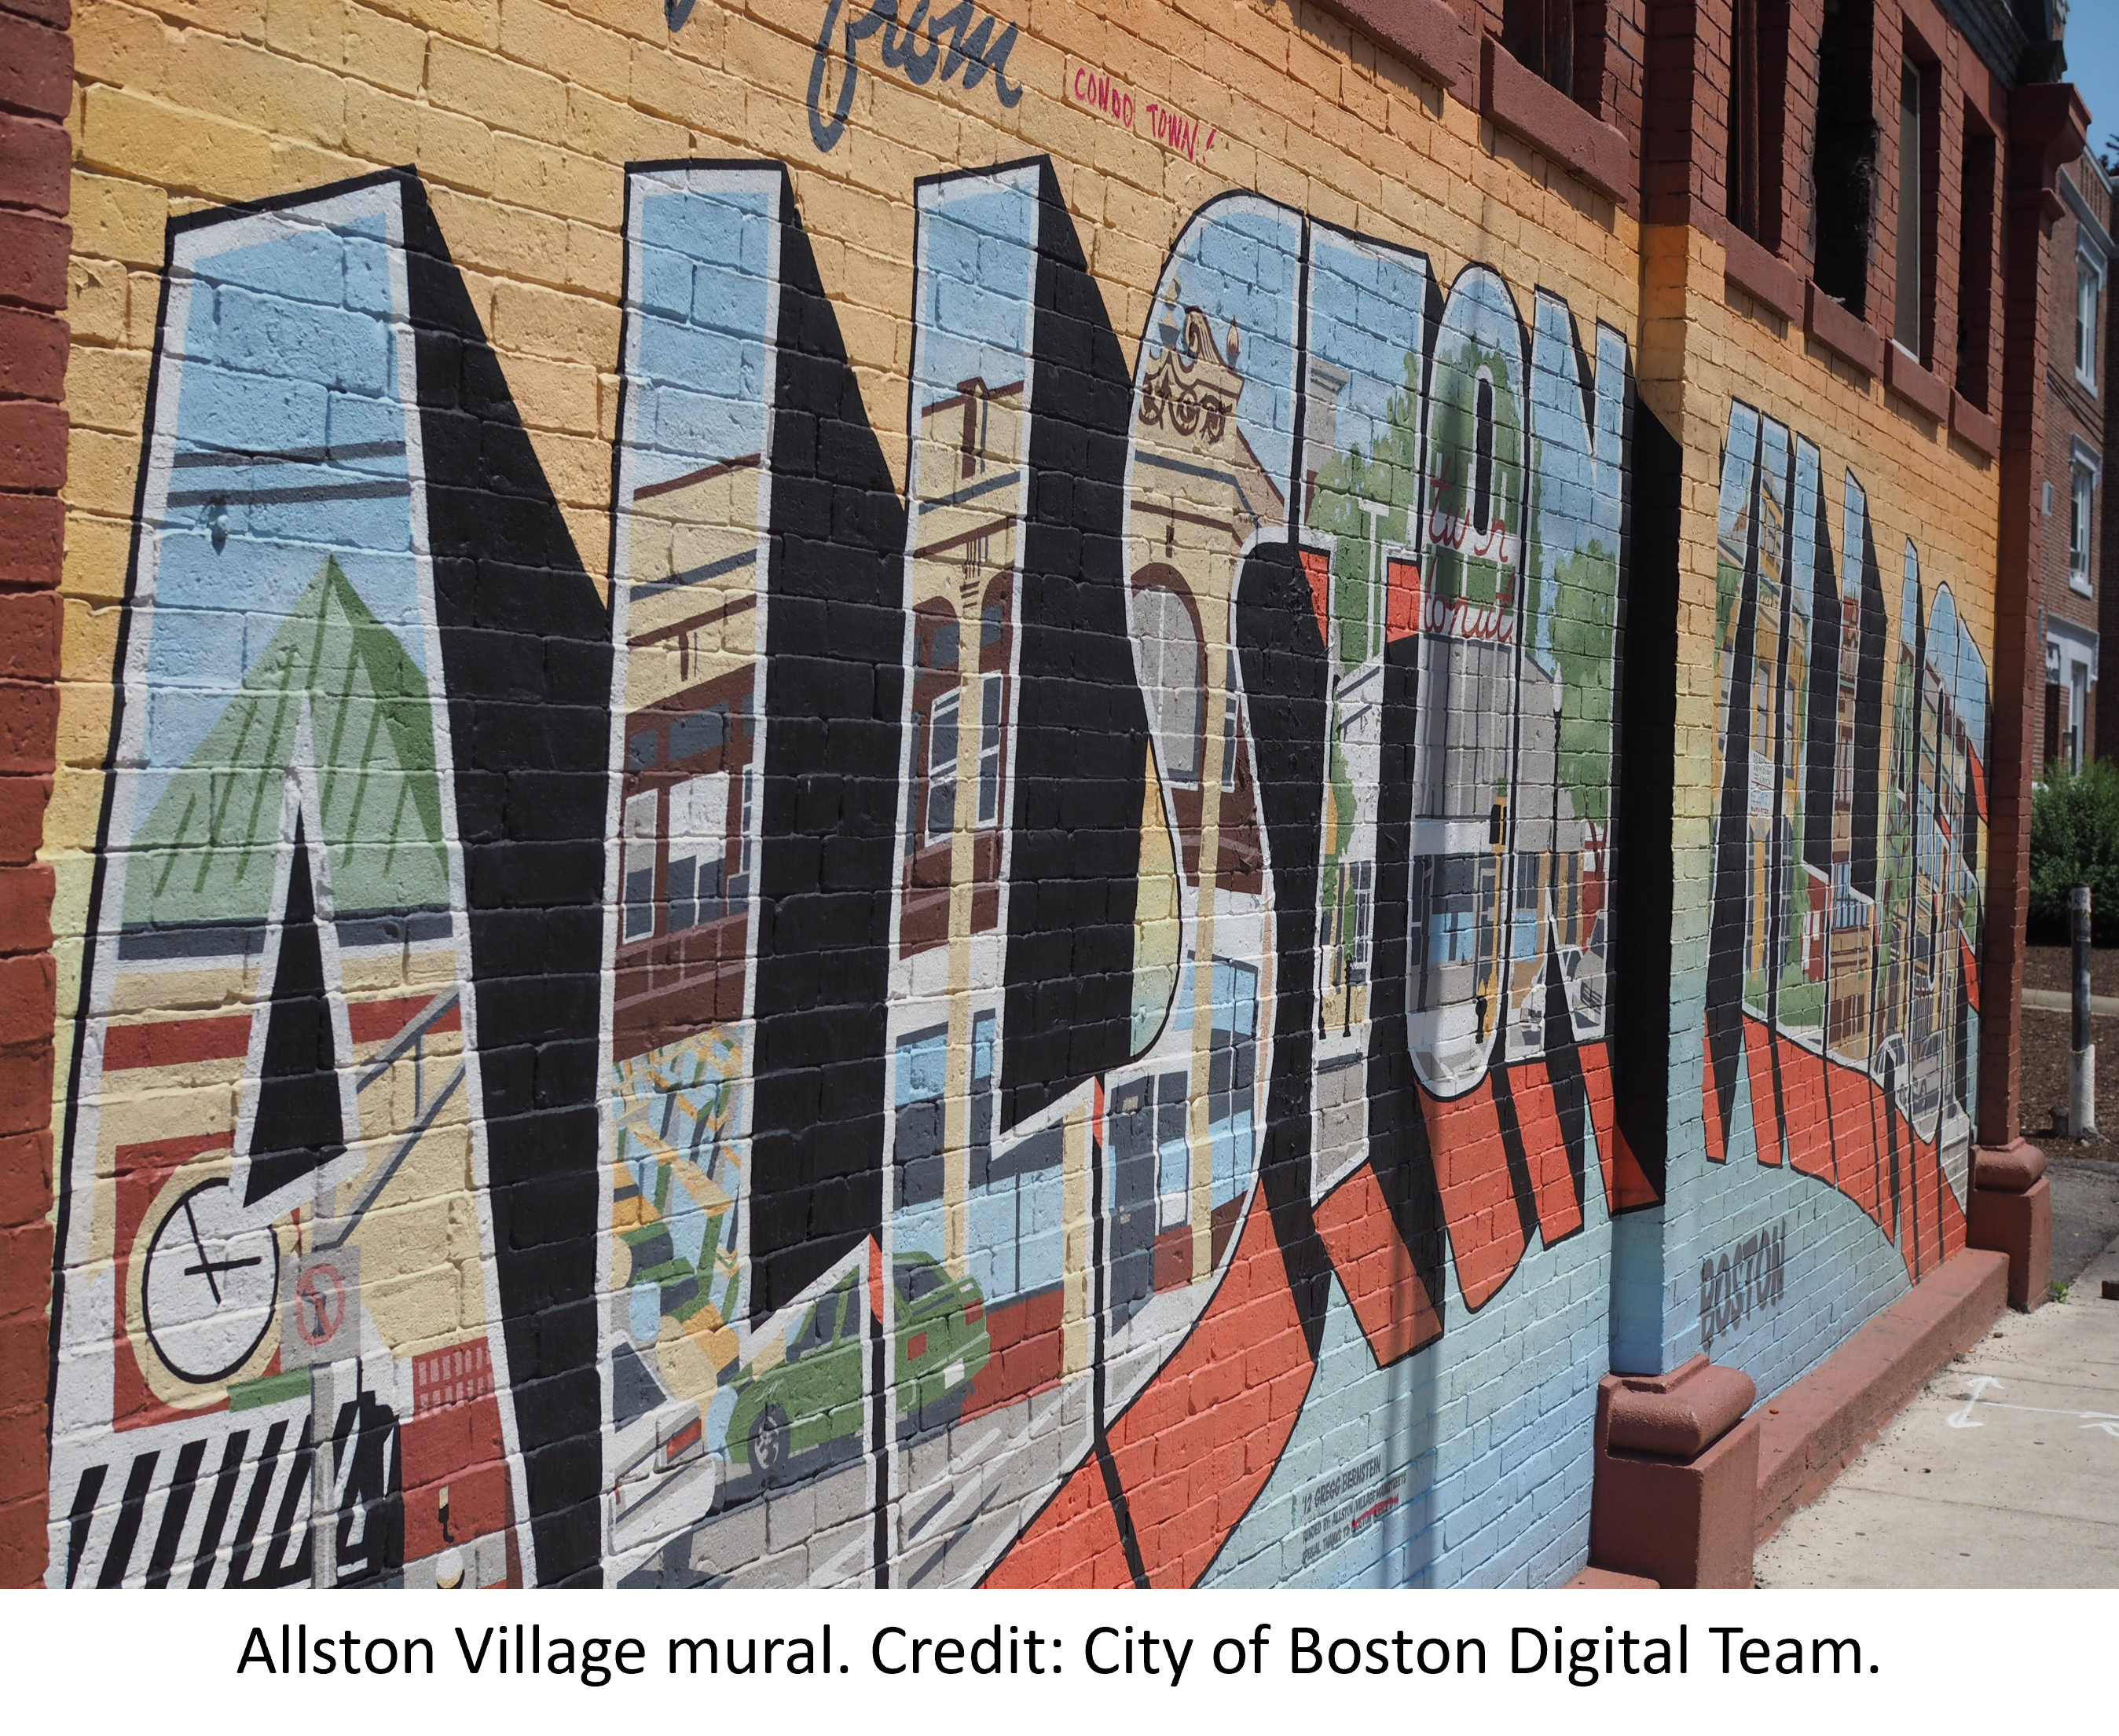 Allston Village mural. Credit: City of Boston Digital Team.